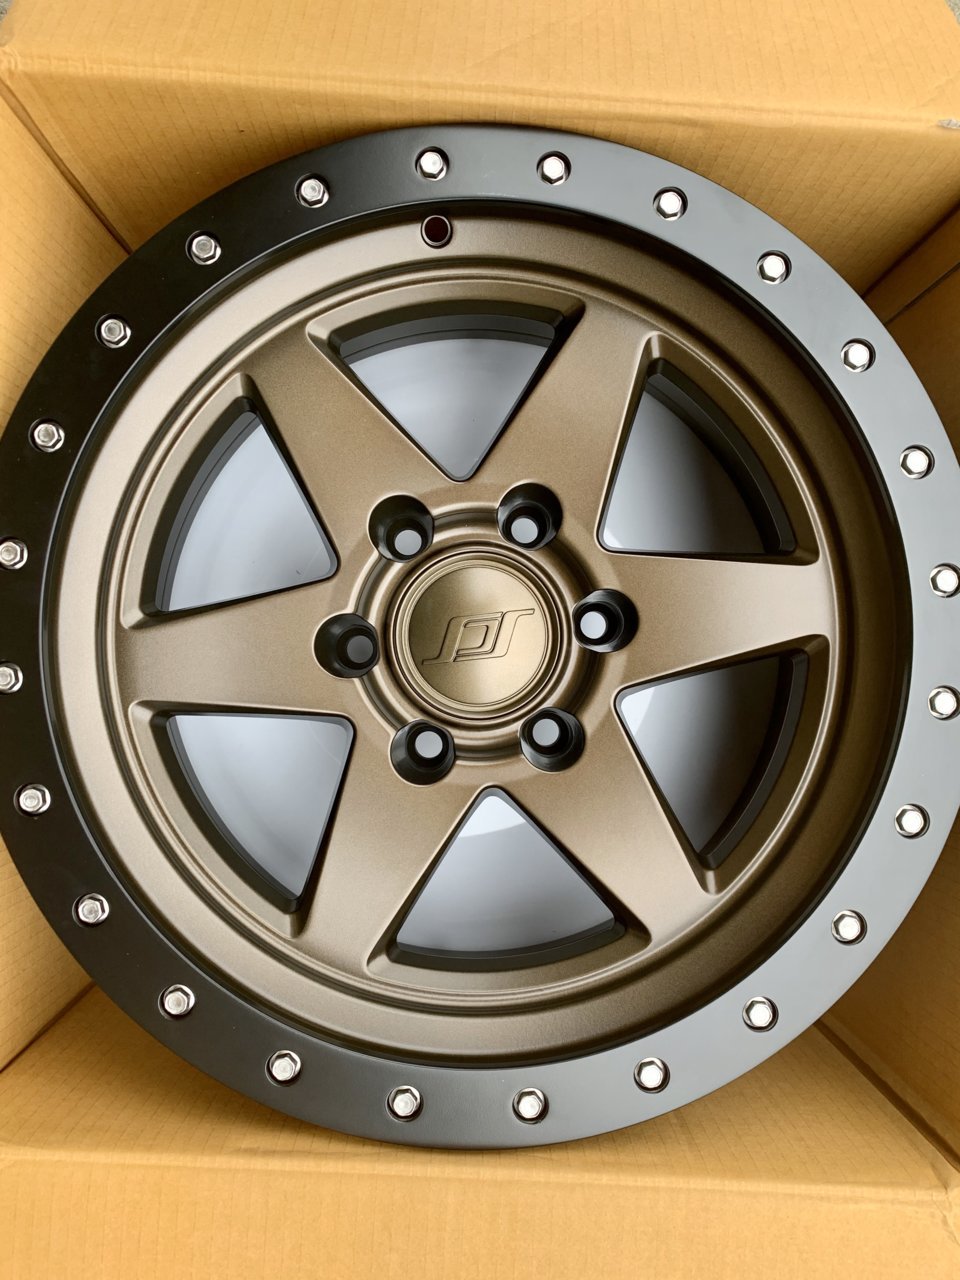 SCS BR6 wheels 16x8, 17x8.5, & 17x9 | Tacoma World